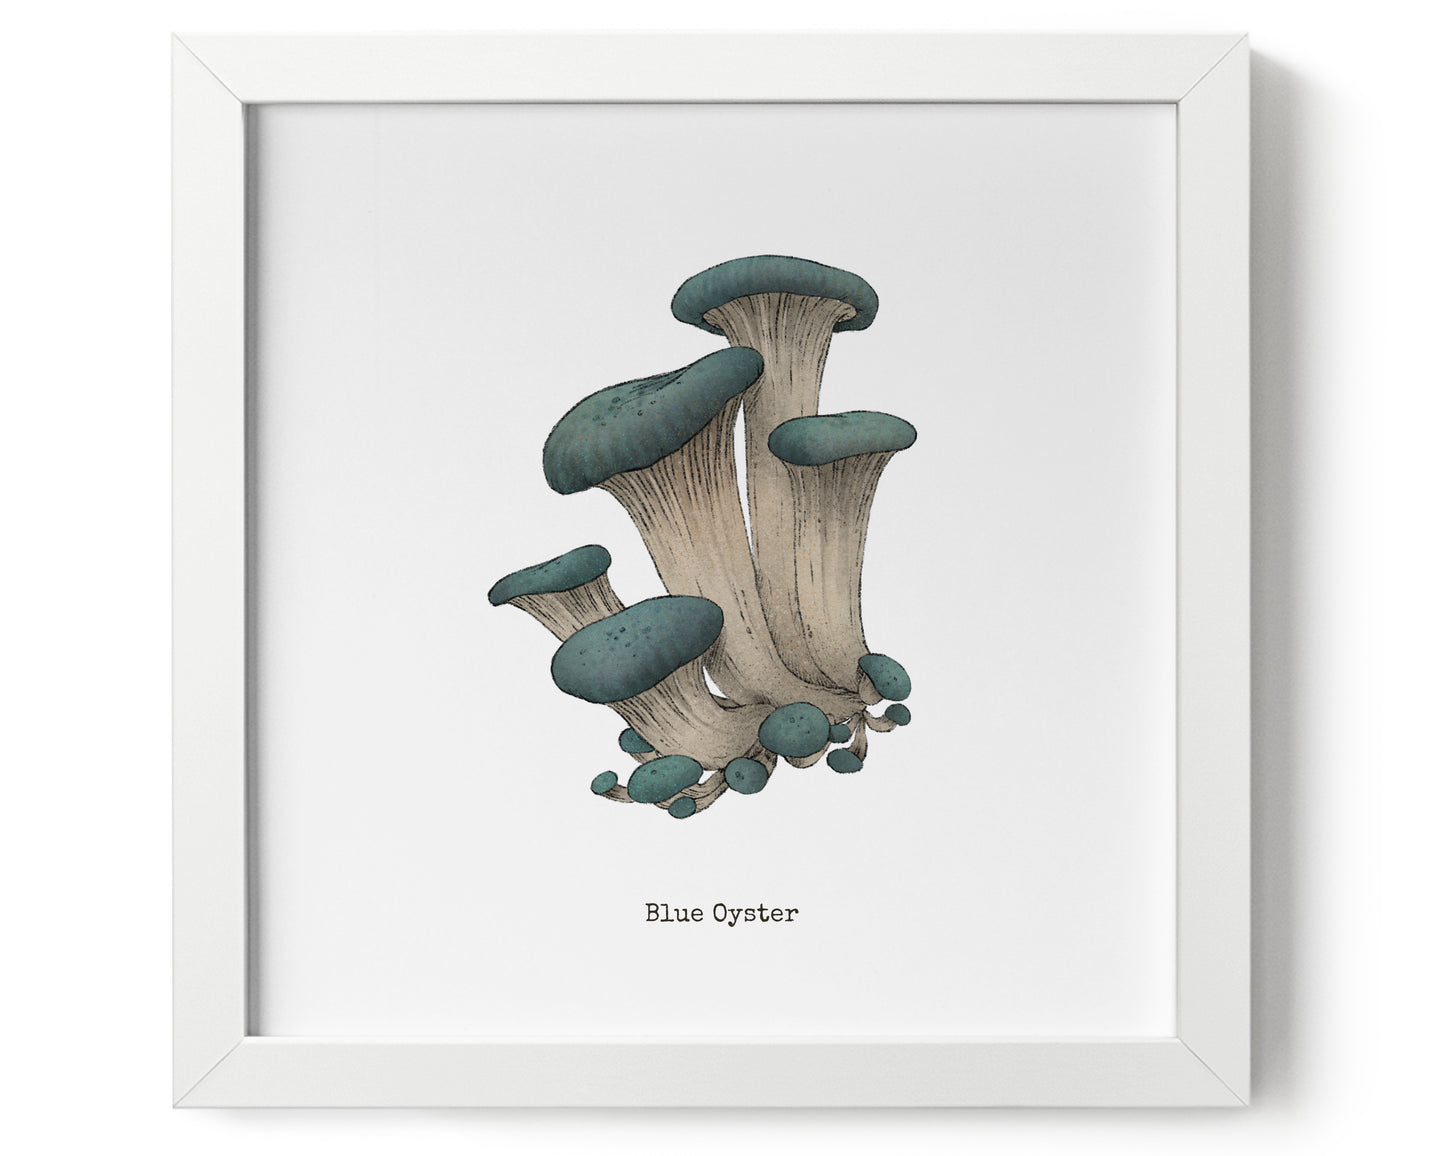 "Blue Oyster" by Catherine Hébert - Blue Oyster Mushroom Art Print - 8"x10" size